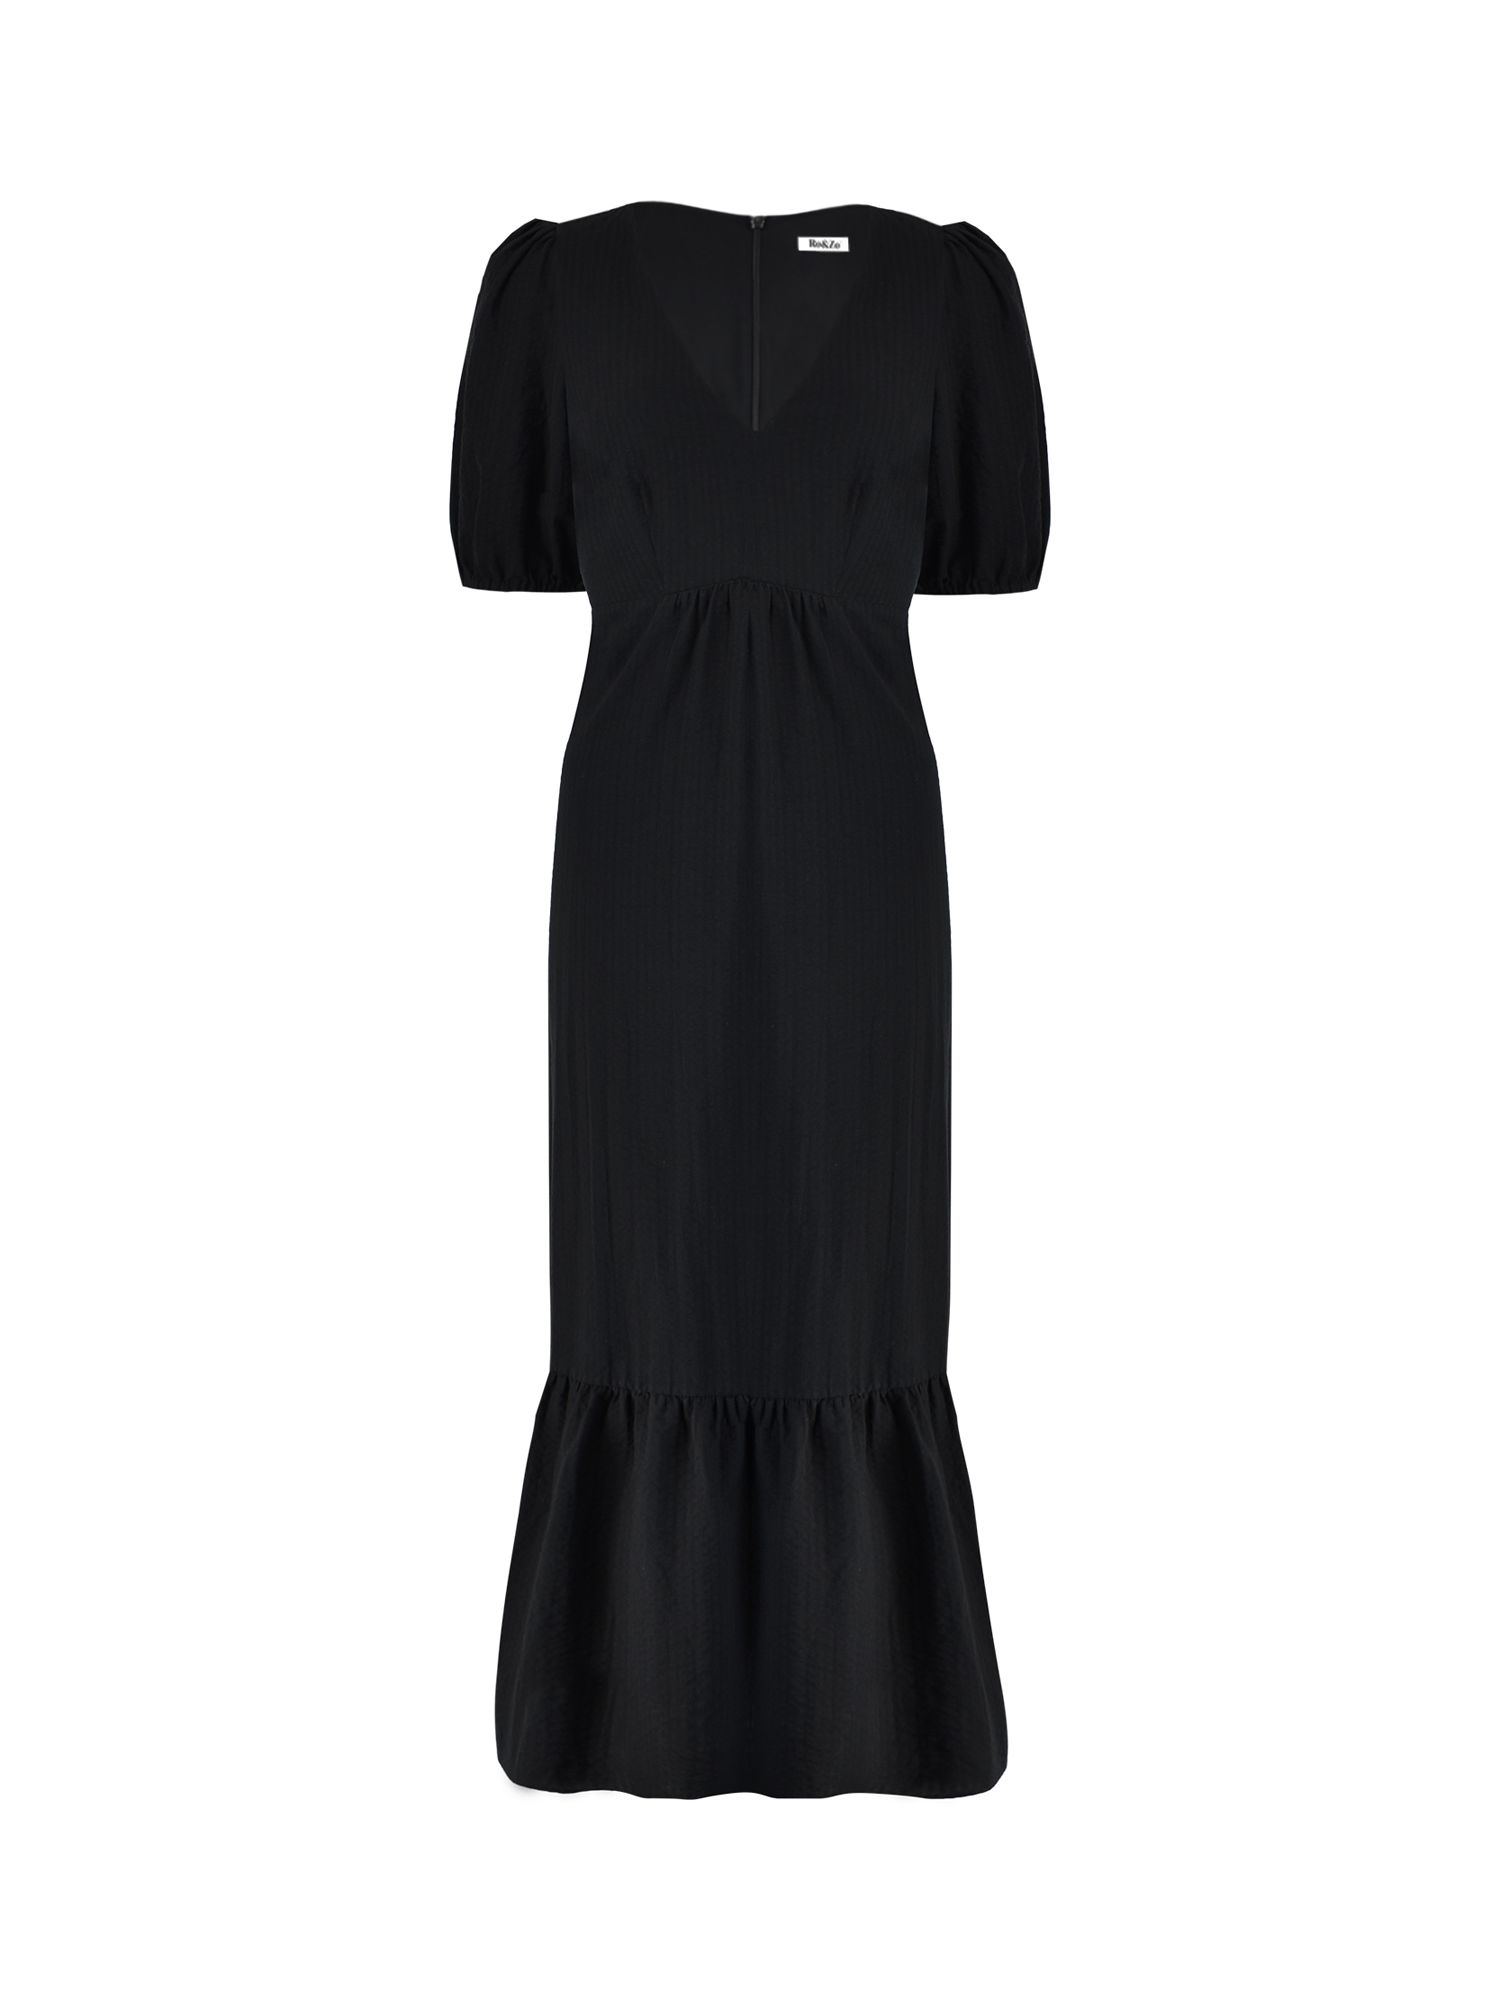 Ro&Zo Textured Midi Dress, Black at John Lewis & Partners